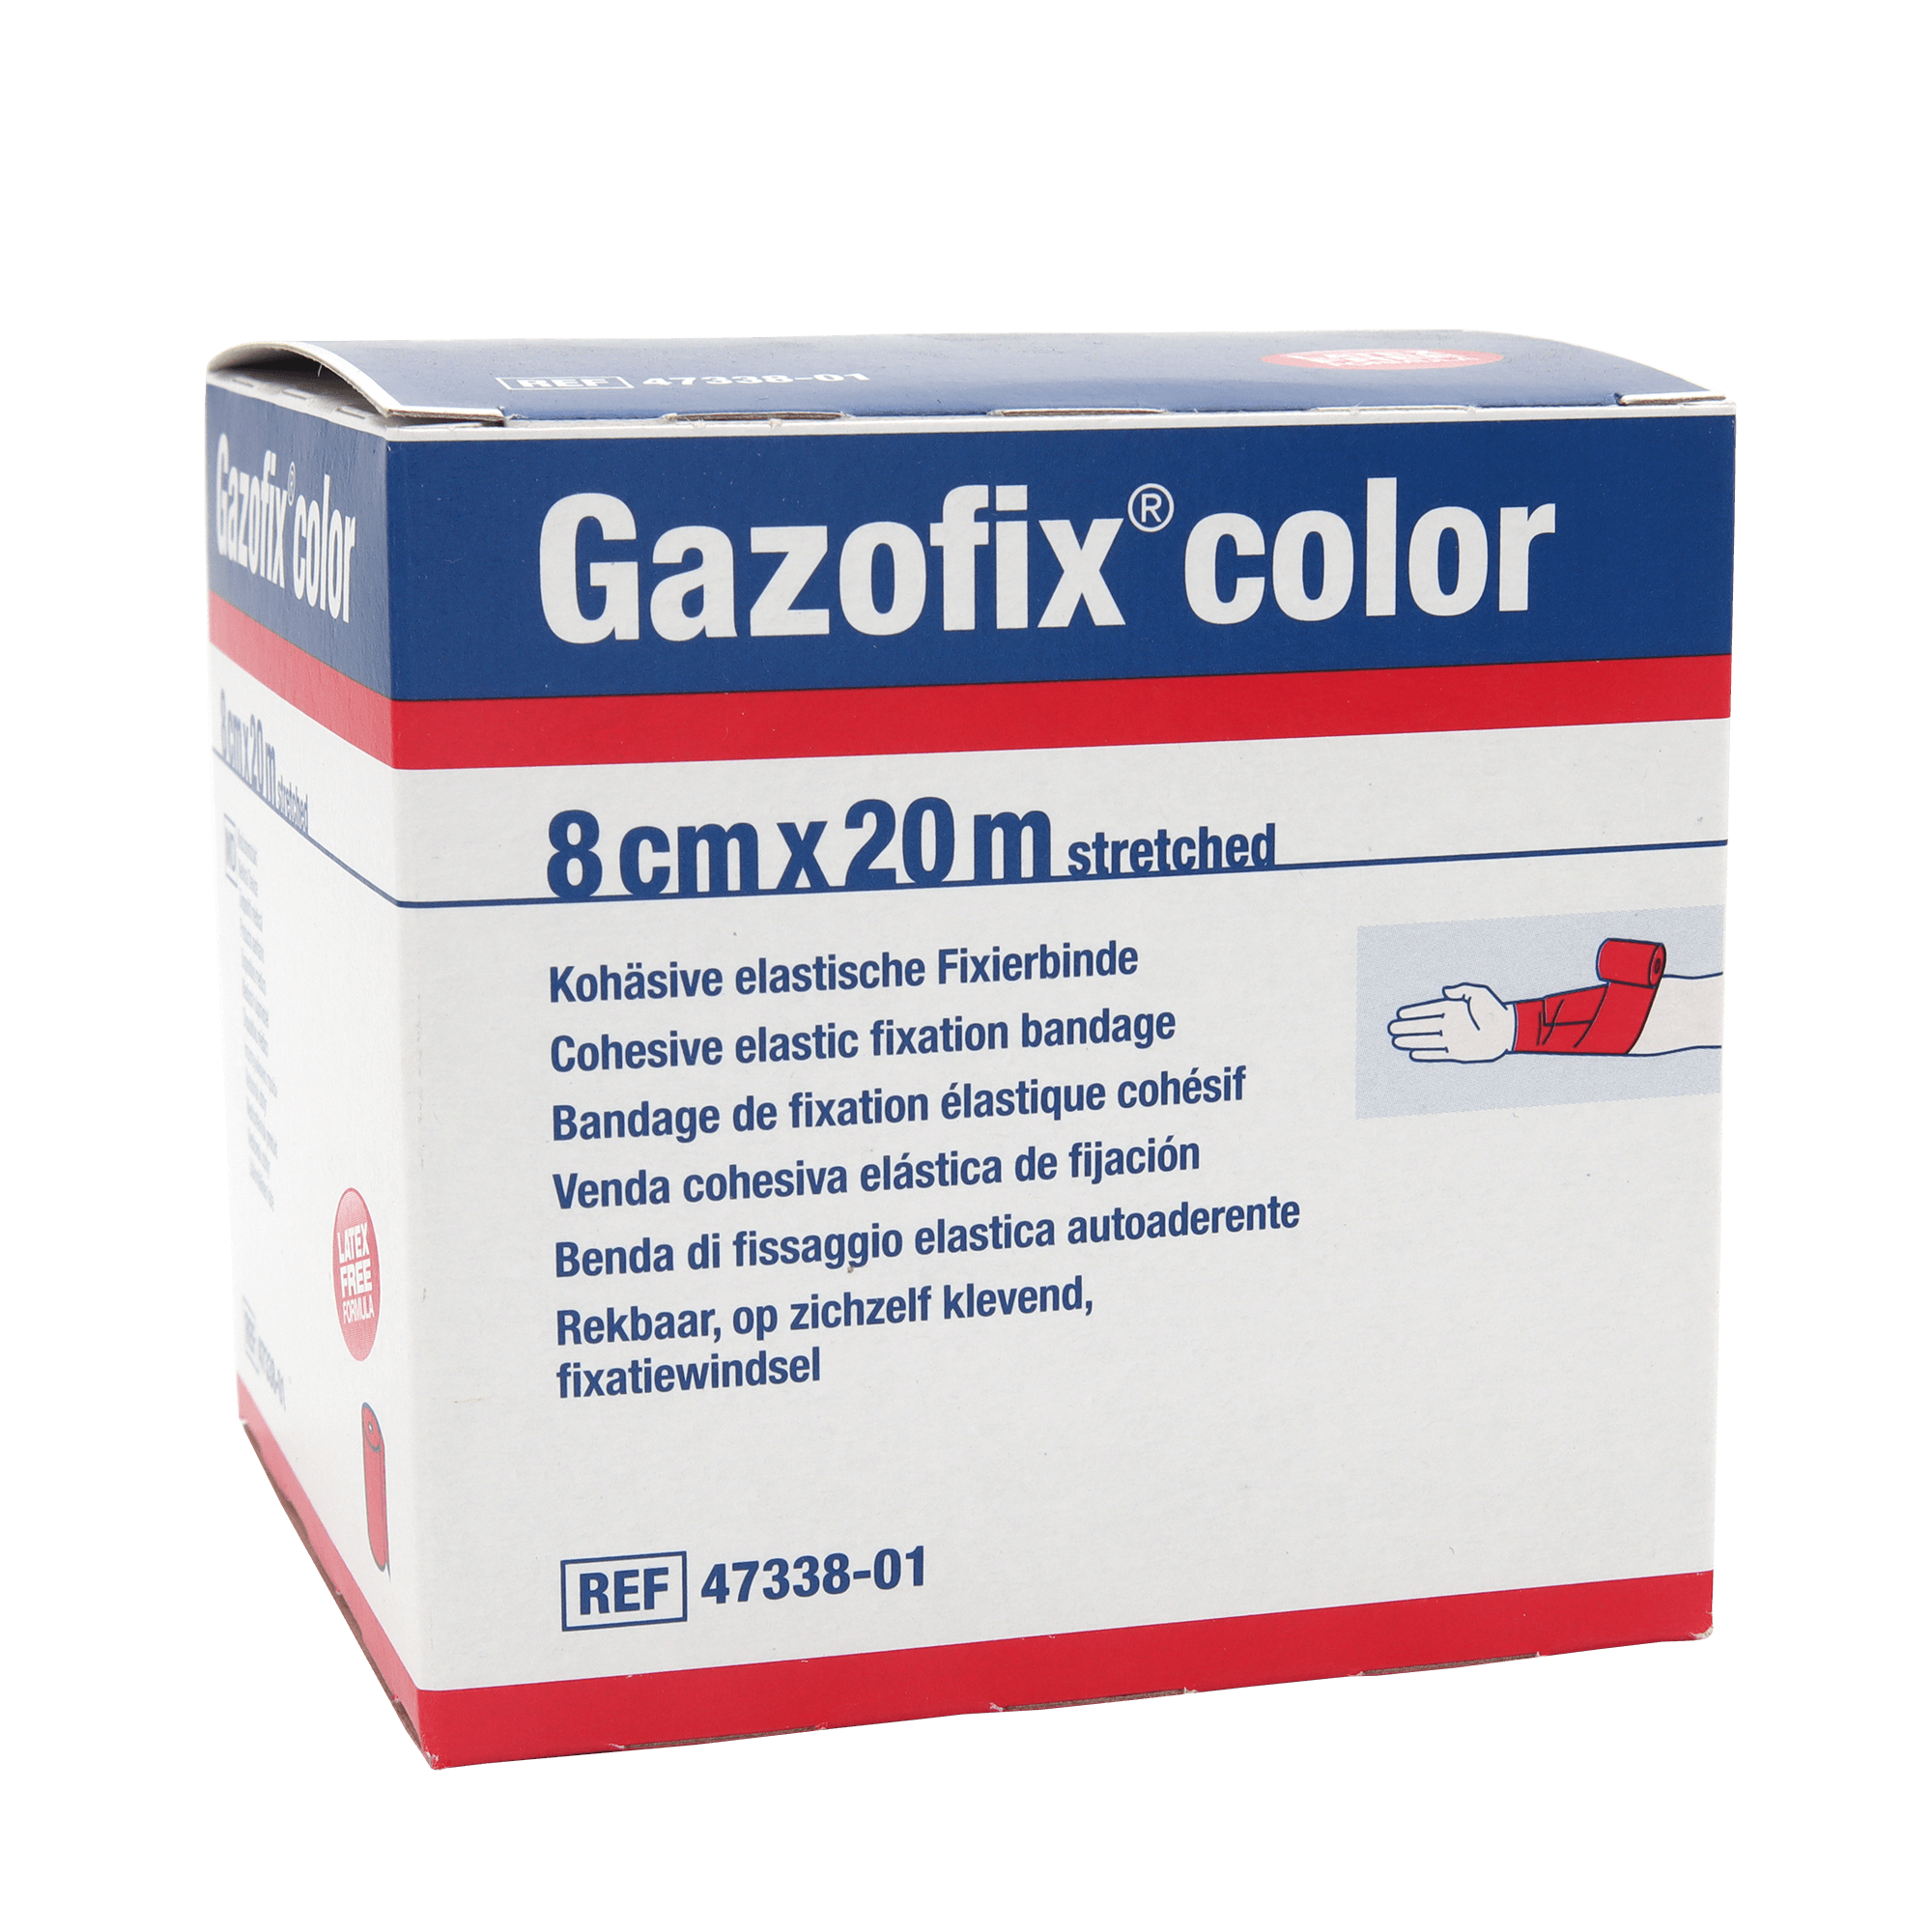 GAZOFIX color Fixierbinde kohäsiv 8 cmx20 m pink